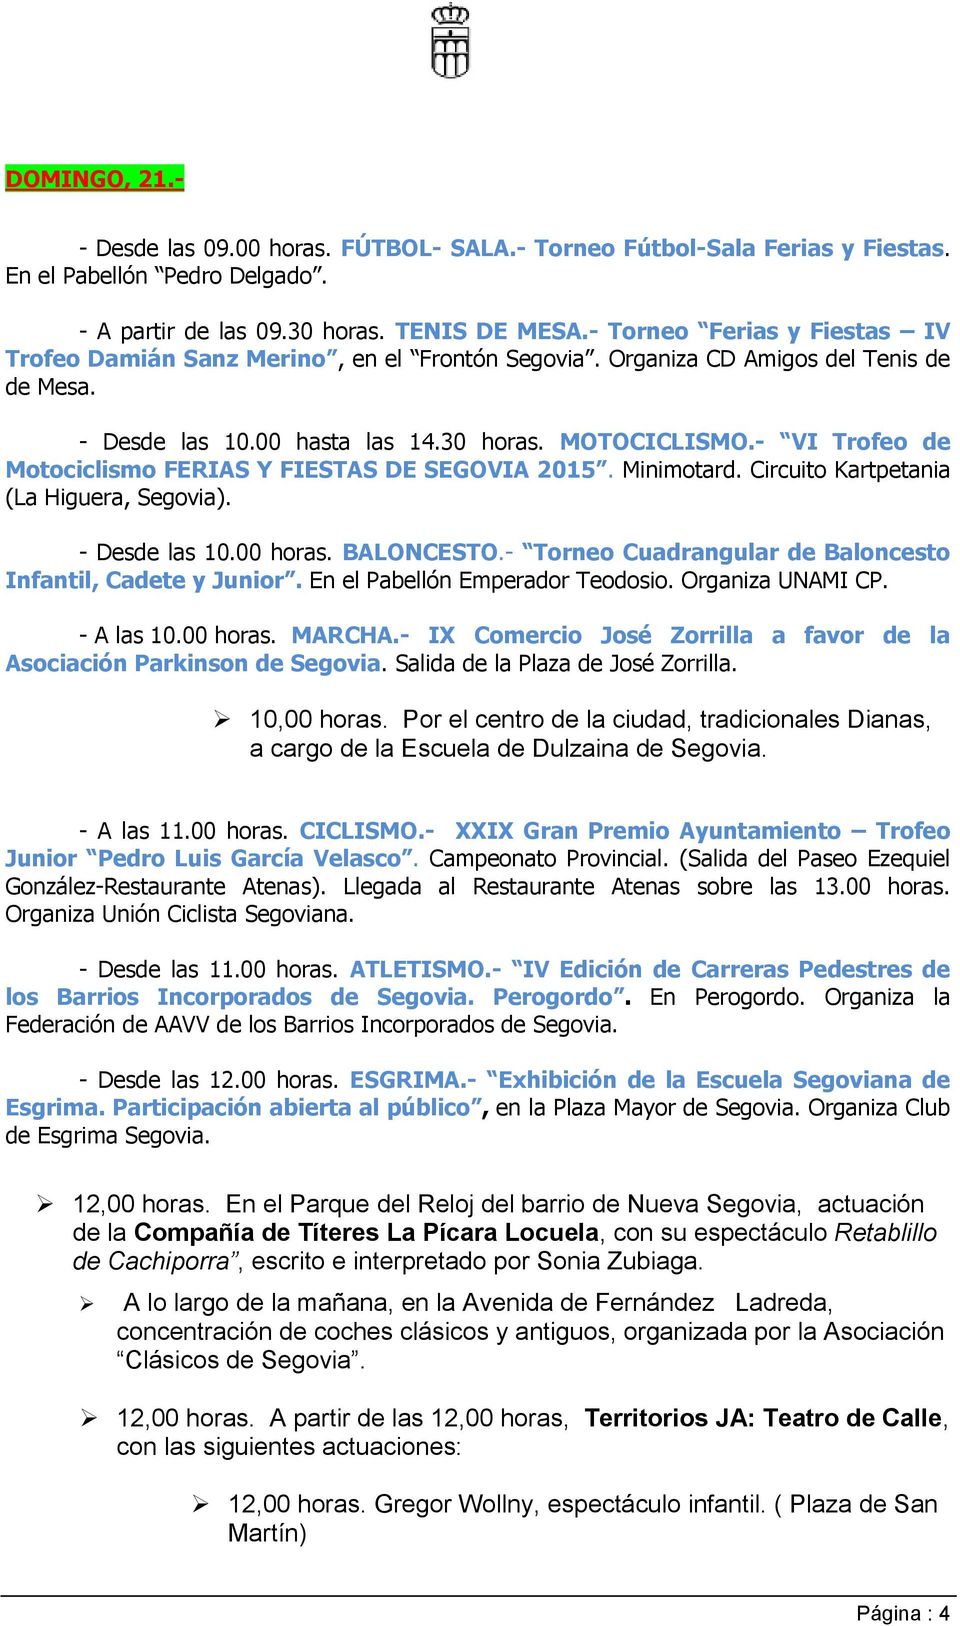 - VI Trofeo de Motociclismo FERIAS Y FIESTAS DE SEGOVIA 2015. Minimotard. Circuito Kartpetania (La Higuera, Segovia). - Desde las 10.00 horas. BALONCESTO.